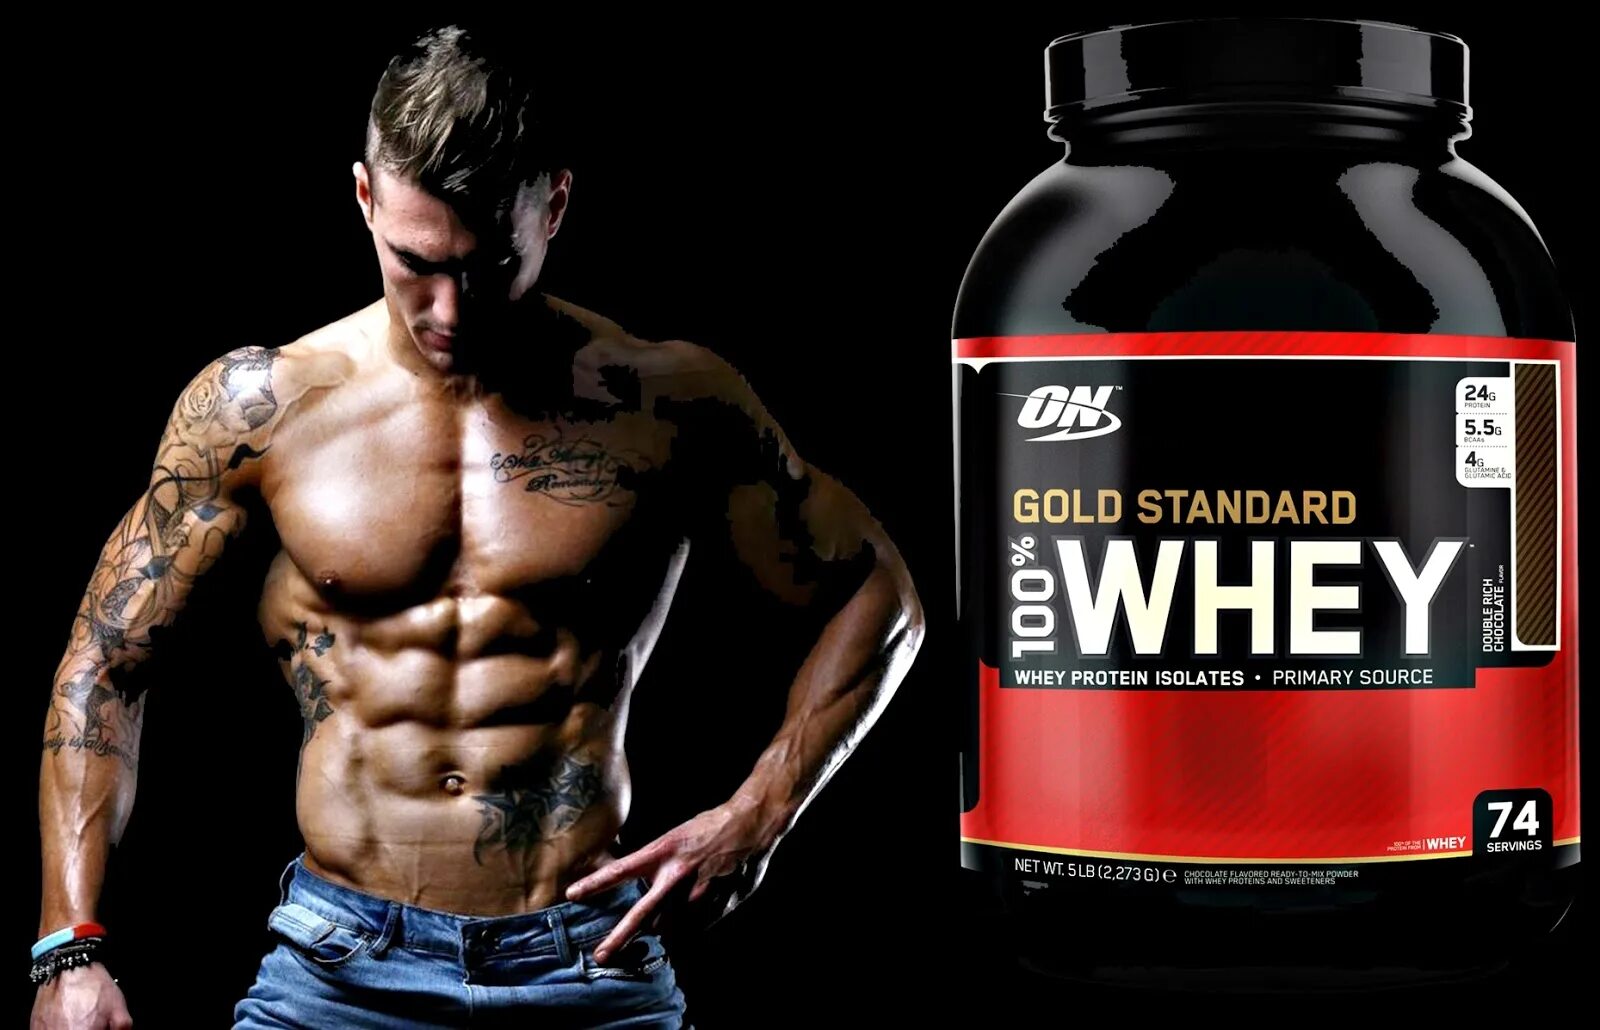 Спортпит Whey Protein. Протеин Whey Gold Standard Optimum Nutrition. Secret Nutrition протеин Whey. Реклама спортивного питания. Покажи протеин